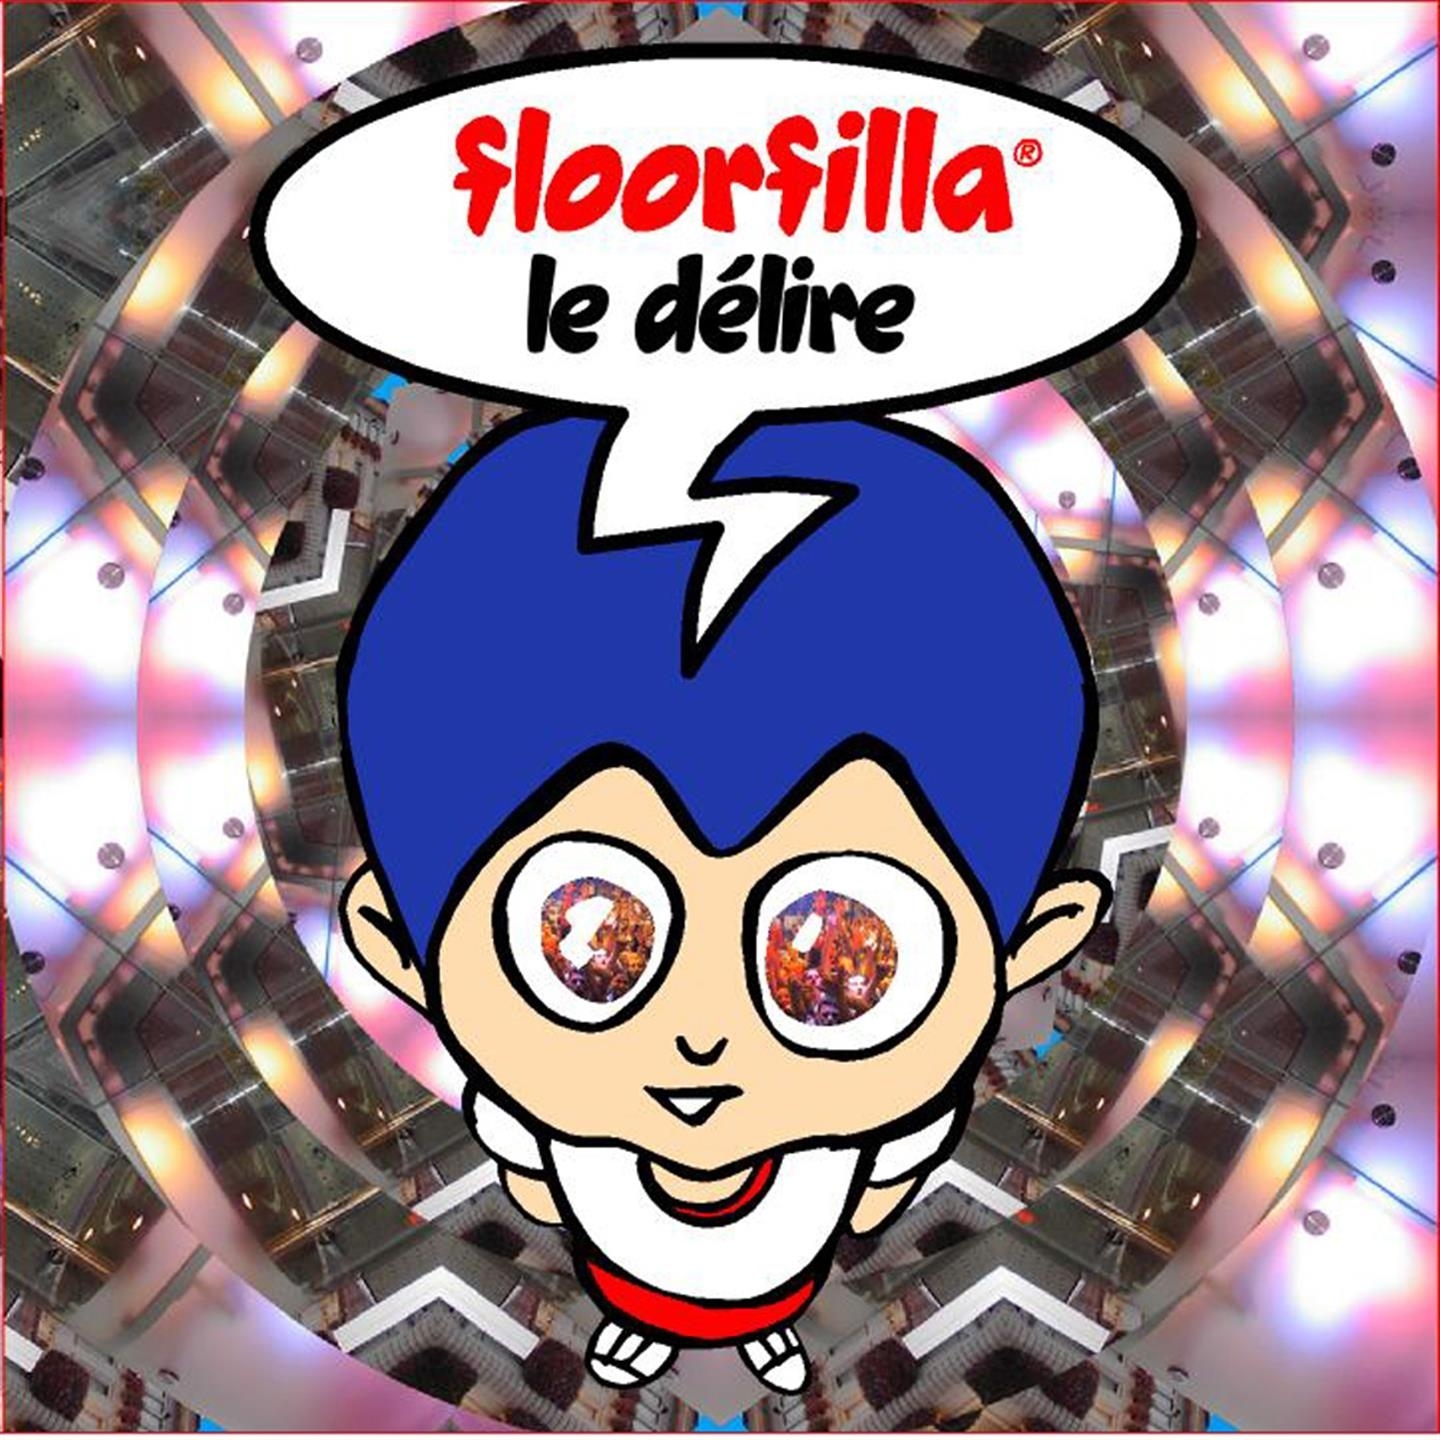 Le delire (Dj Cerla Floorfiller Mix)